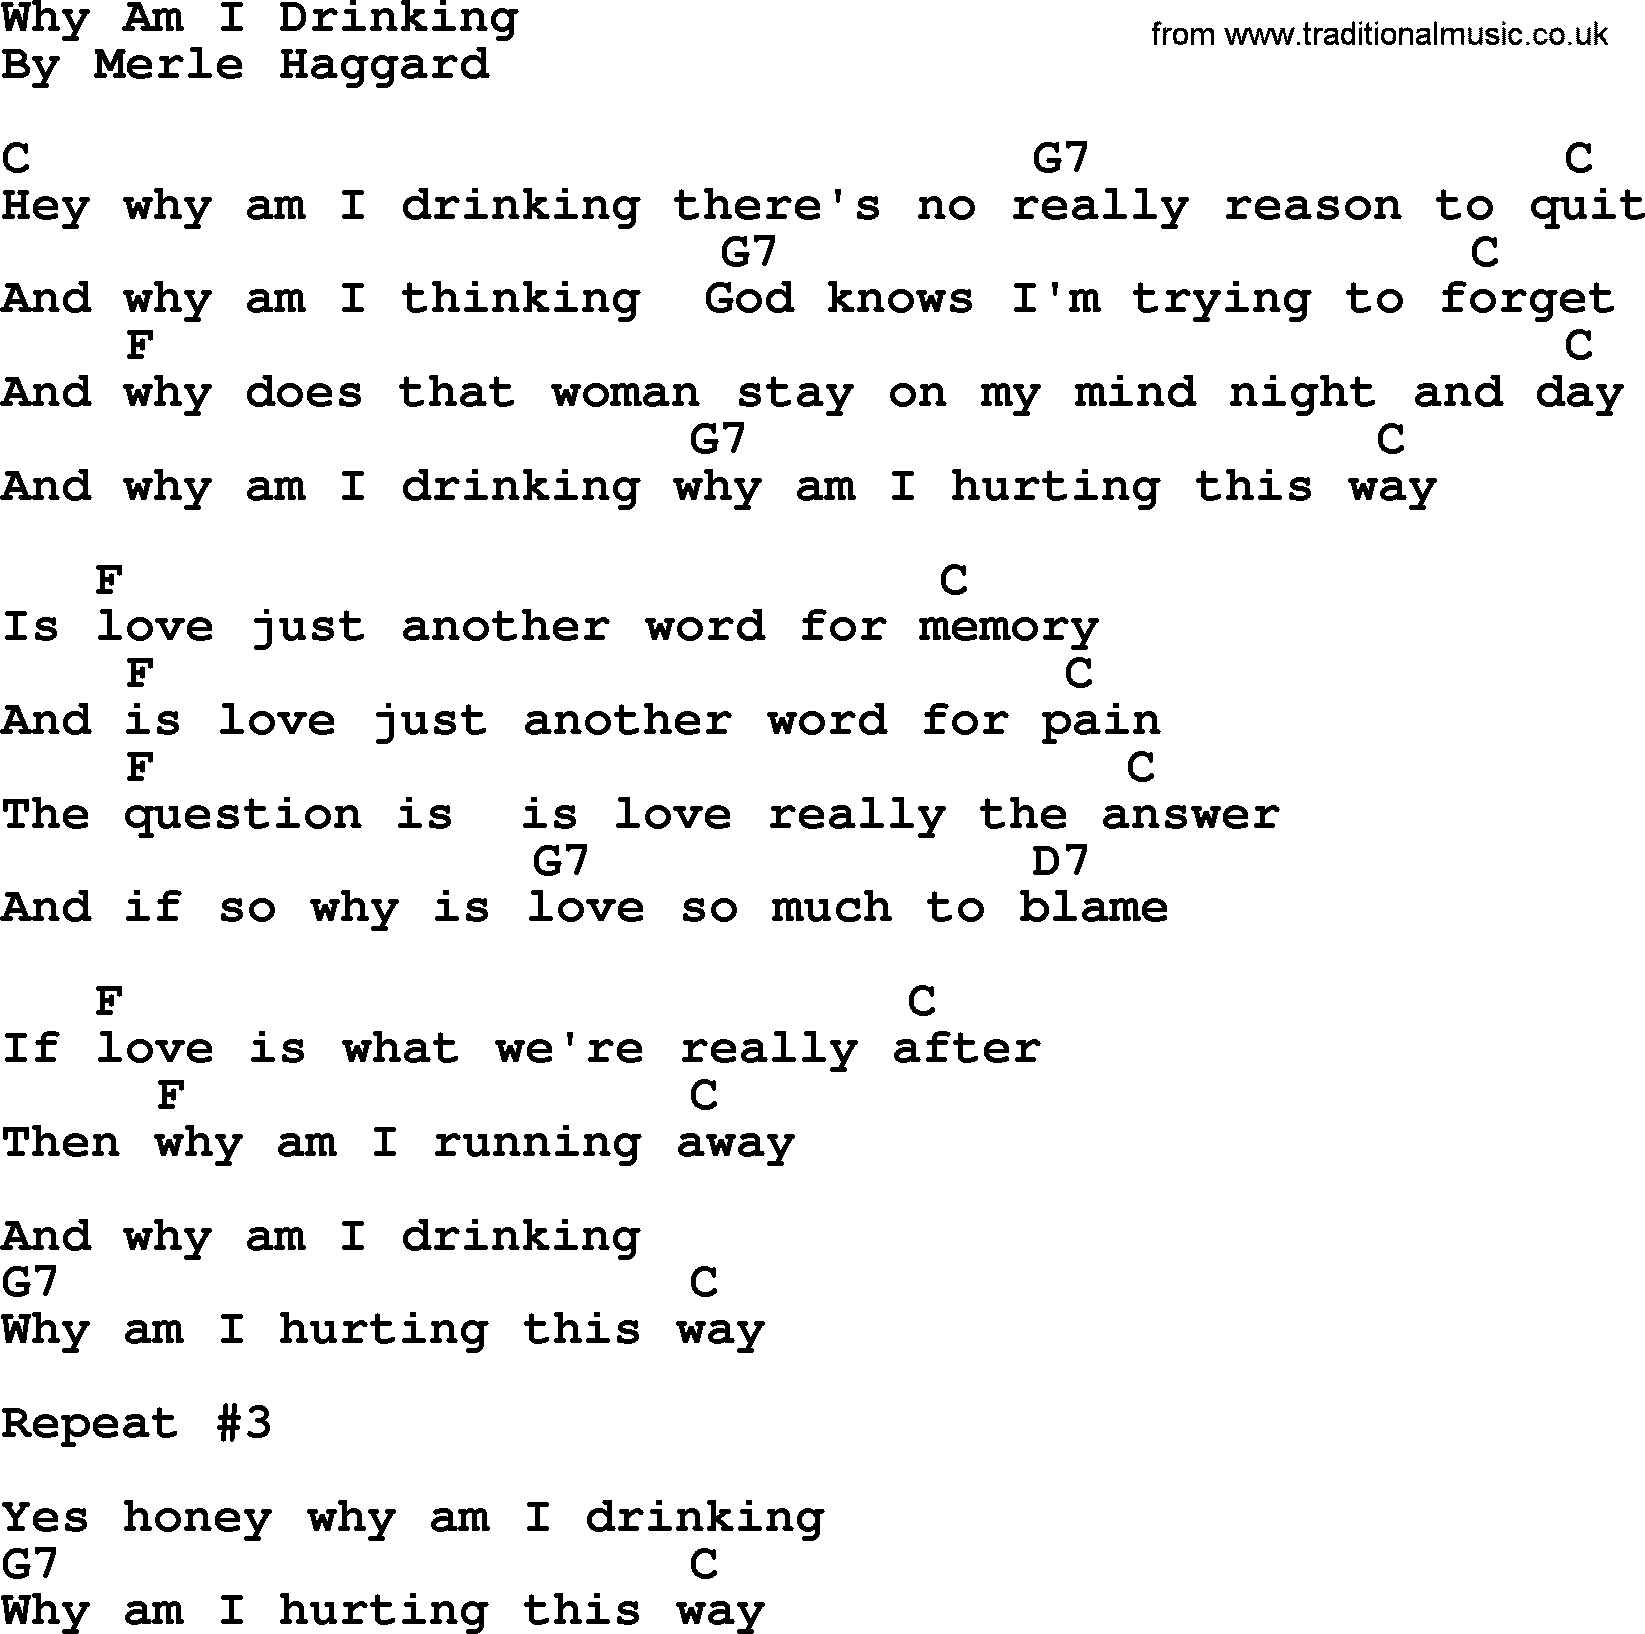 Merle Haggard song: Why Am I Drinking, lyrics and chords